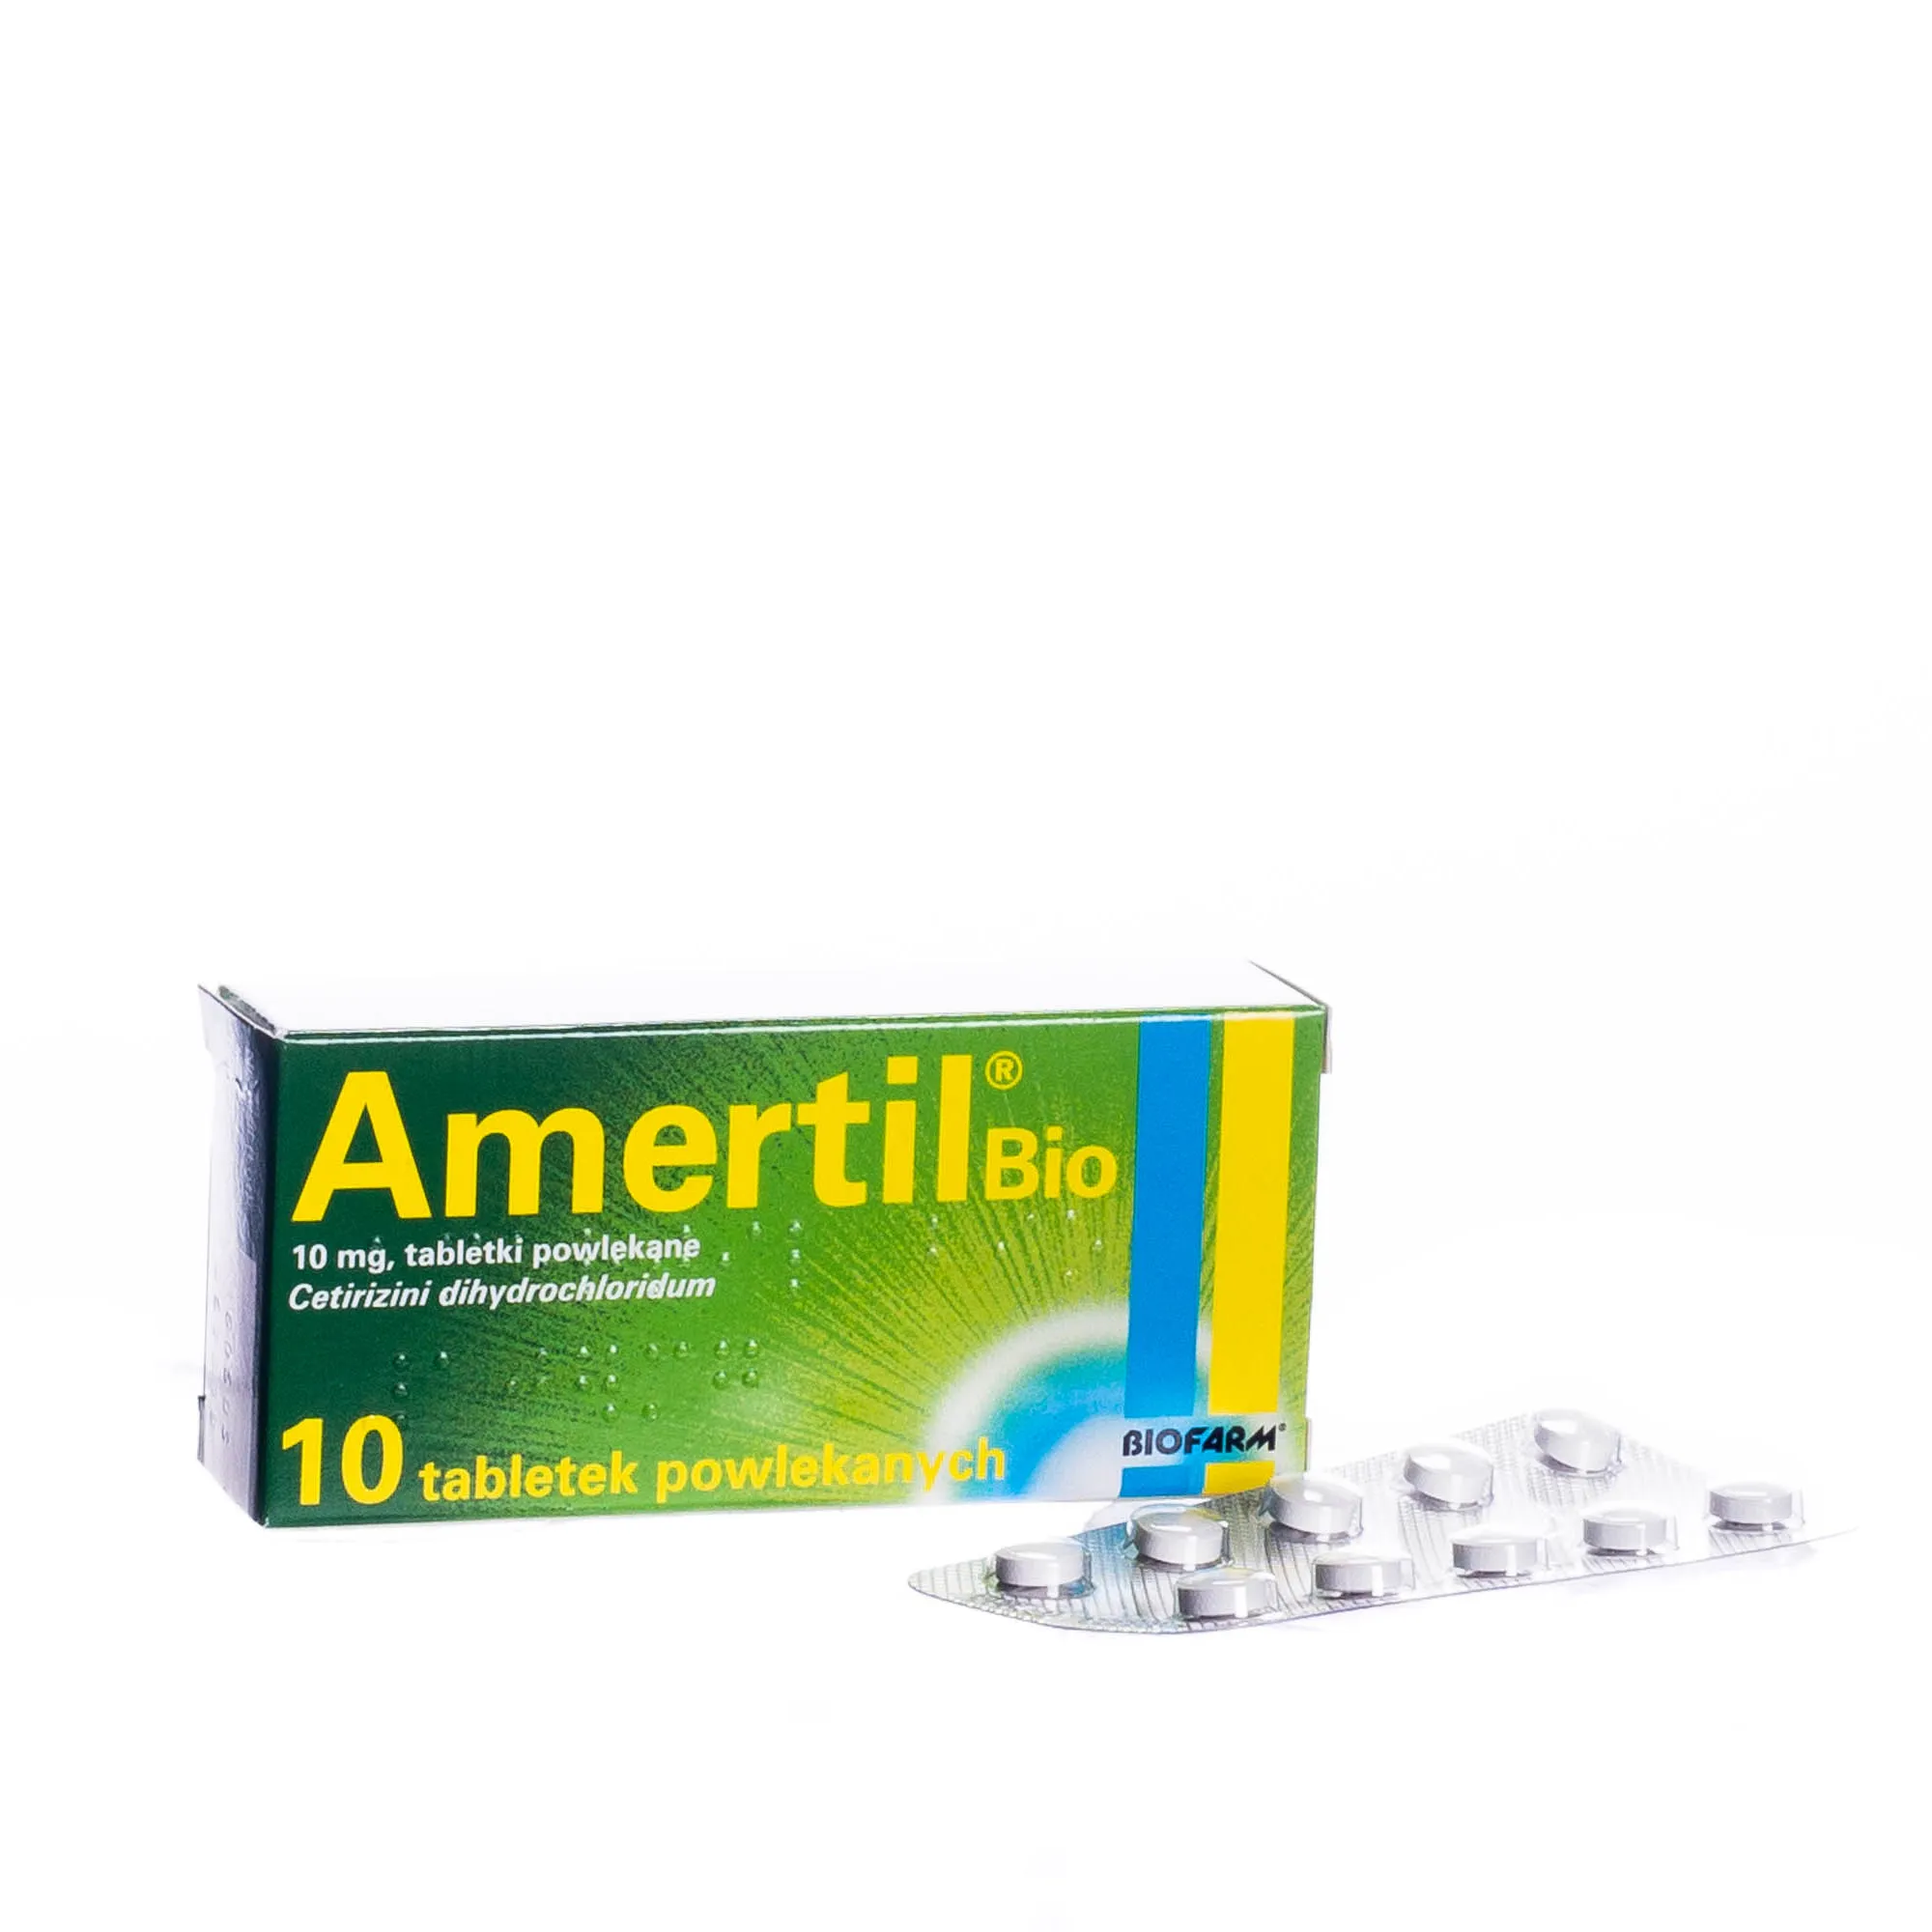 Amertil Bio 10 mg, 10 tabletek powlekanych 